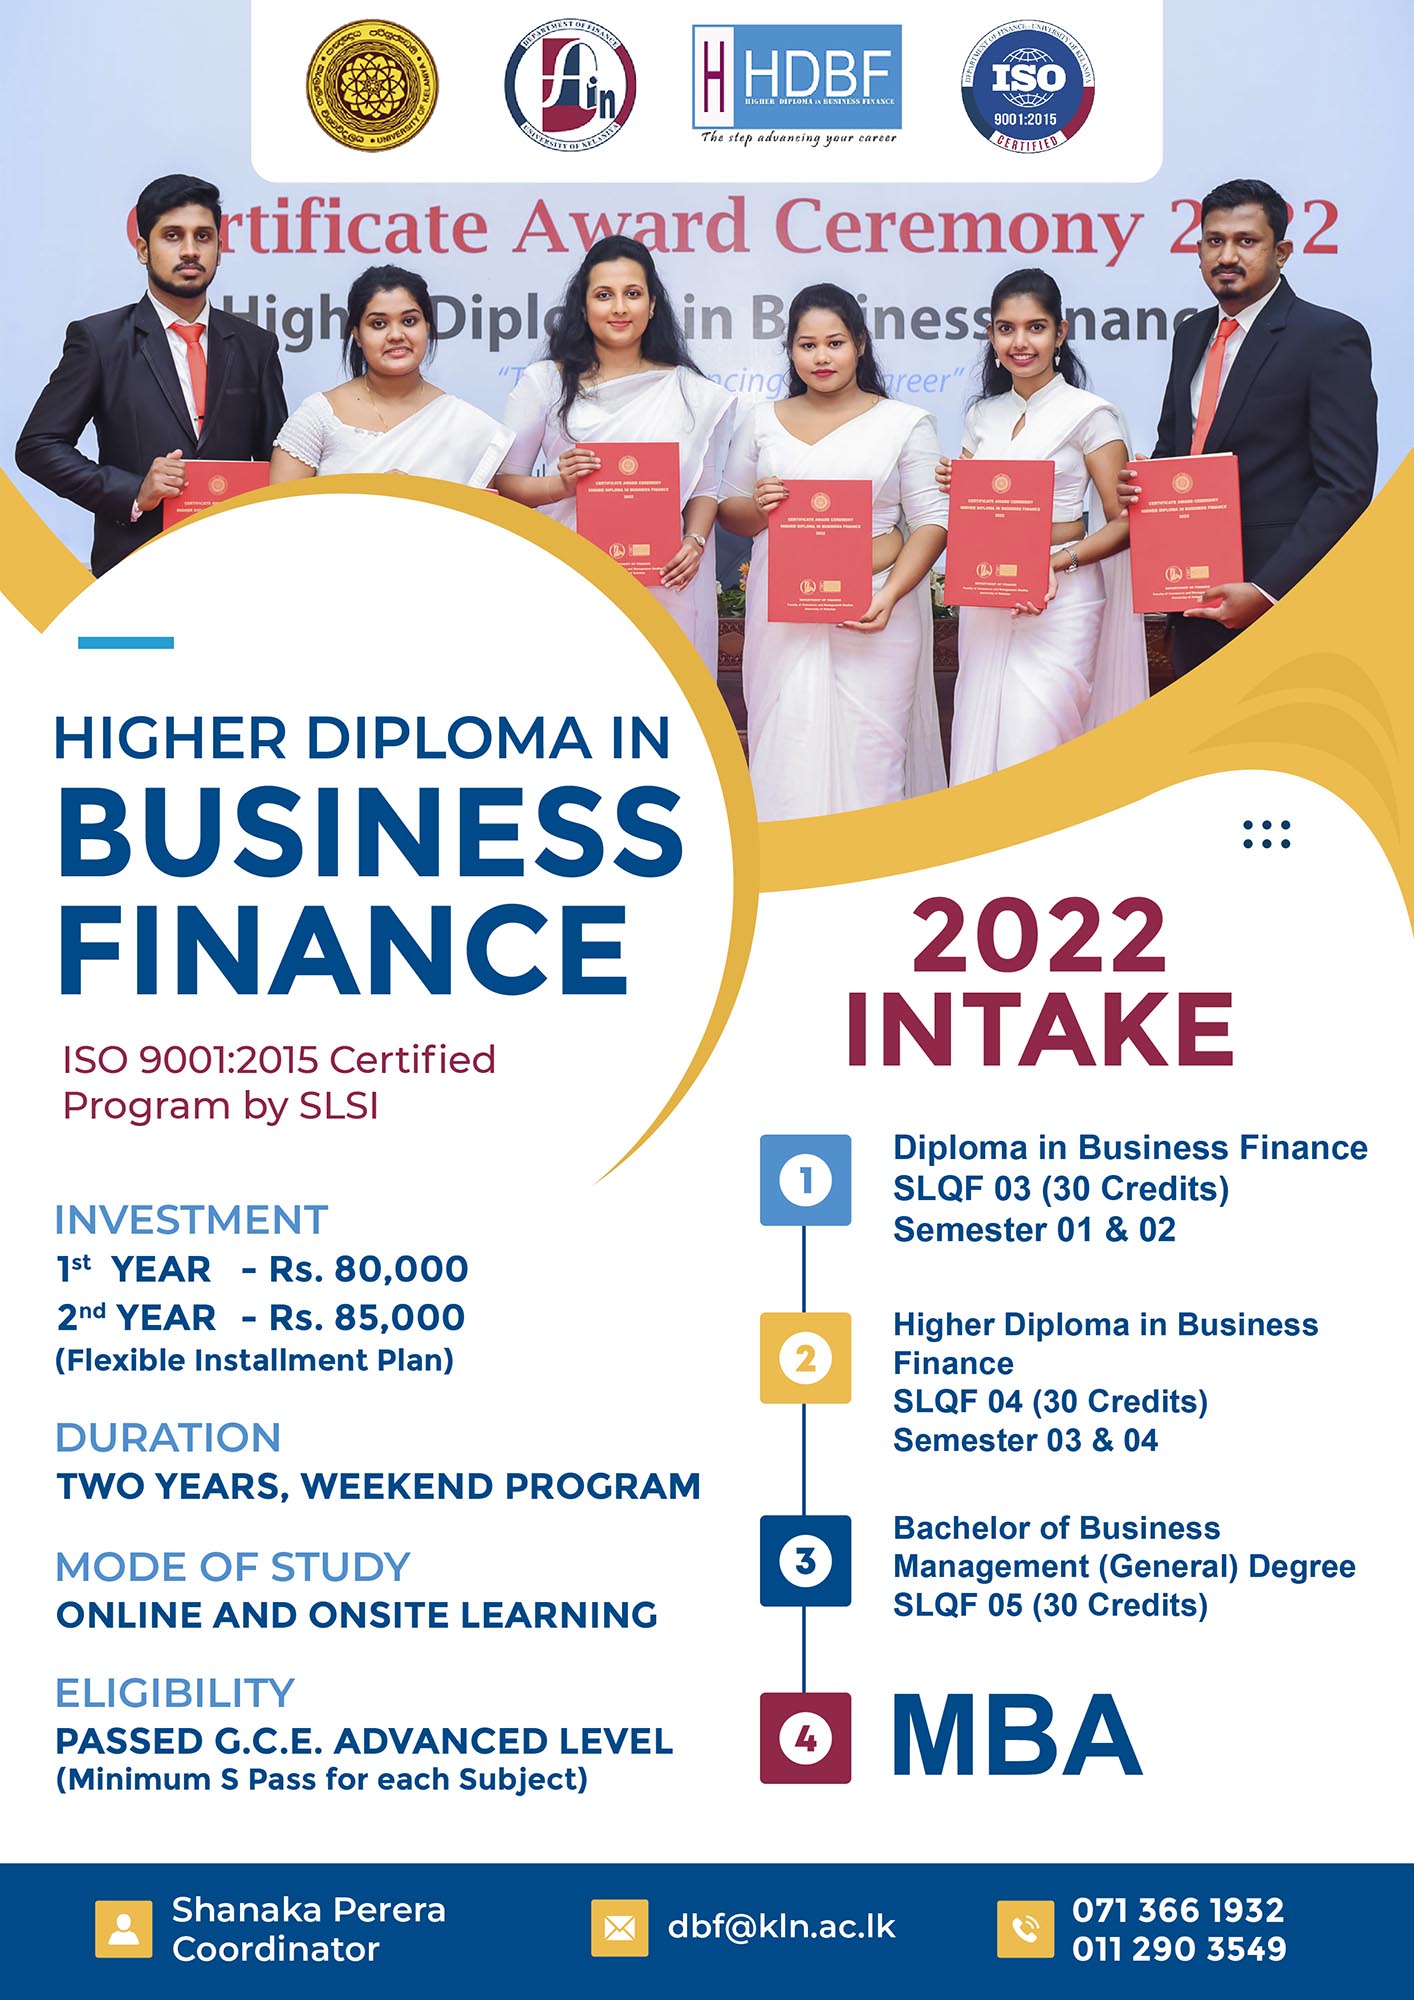 Higher Diploma in Business Finance (HDBF) 2022 - University of Kelaniya